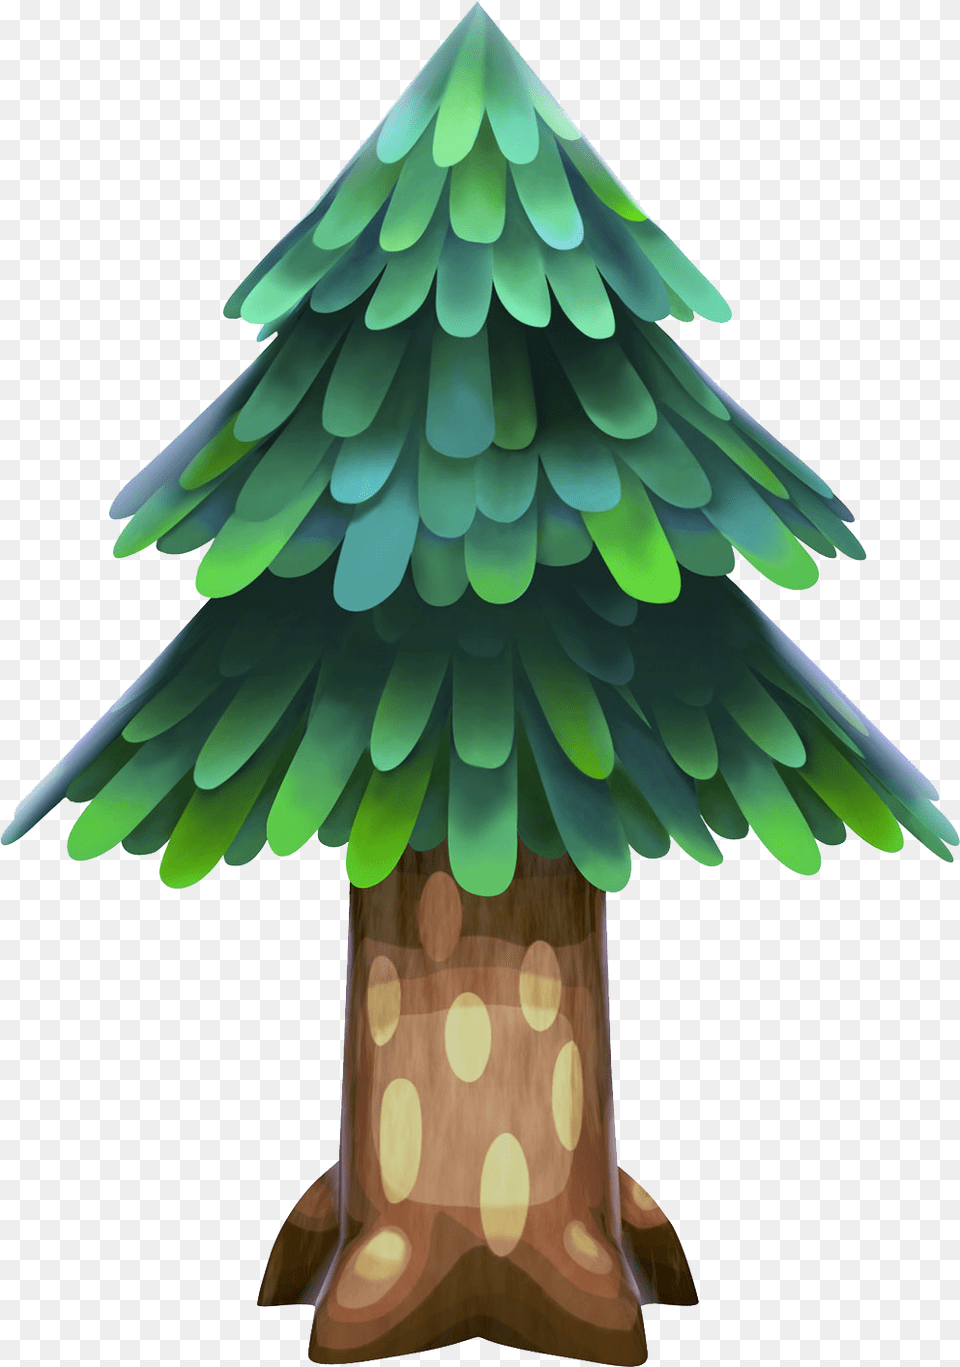 Cedar Tree Animal Crossing Tree, Plant, Lamp, Bird Png